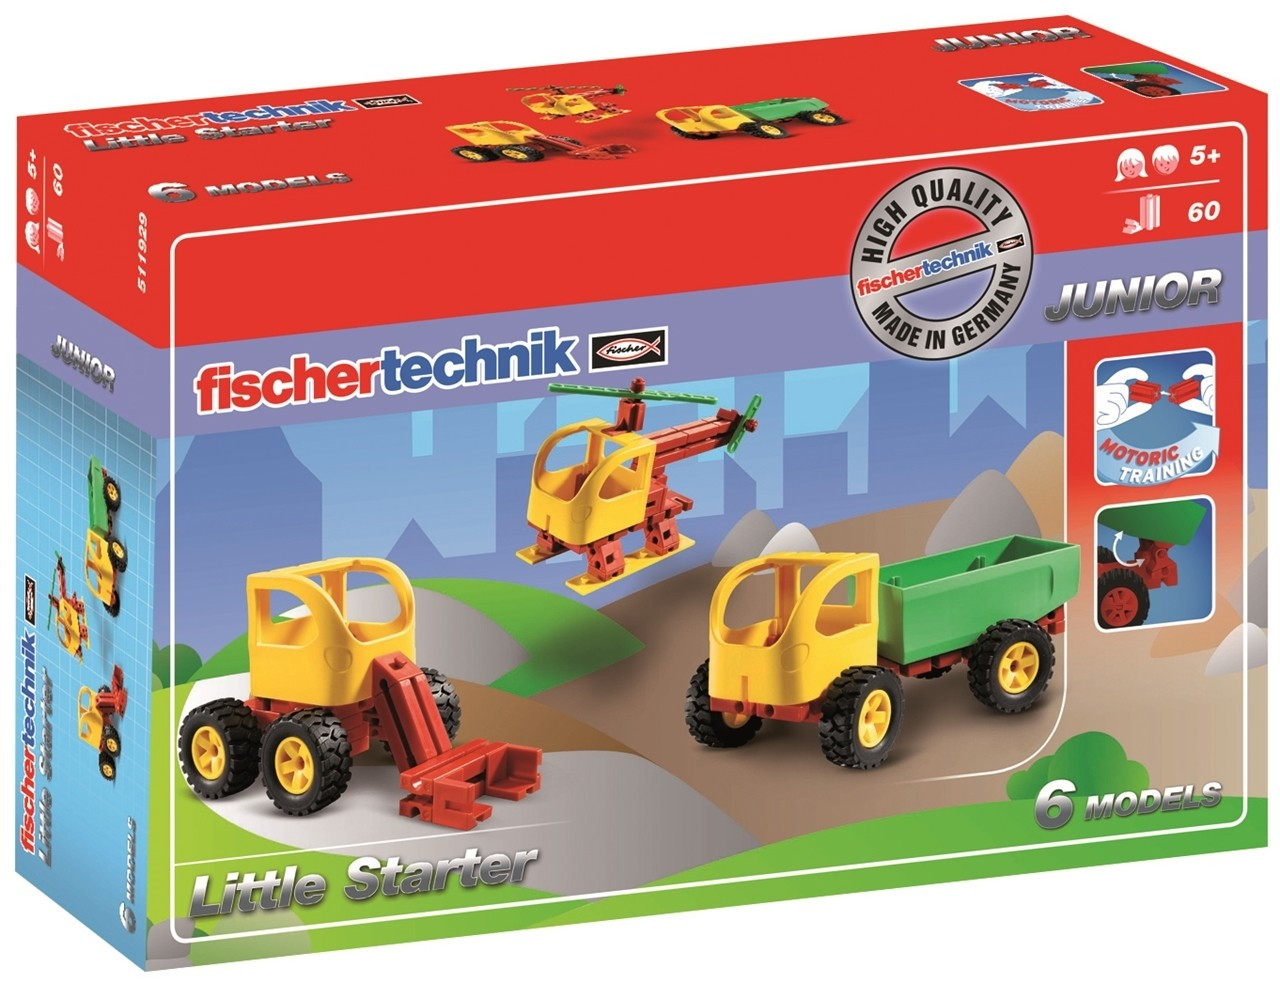 Set Constructie Fischertechnik Junior Little Starter 6 Modele